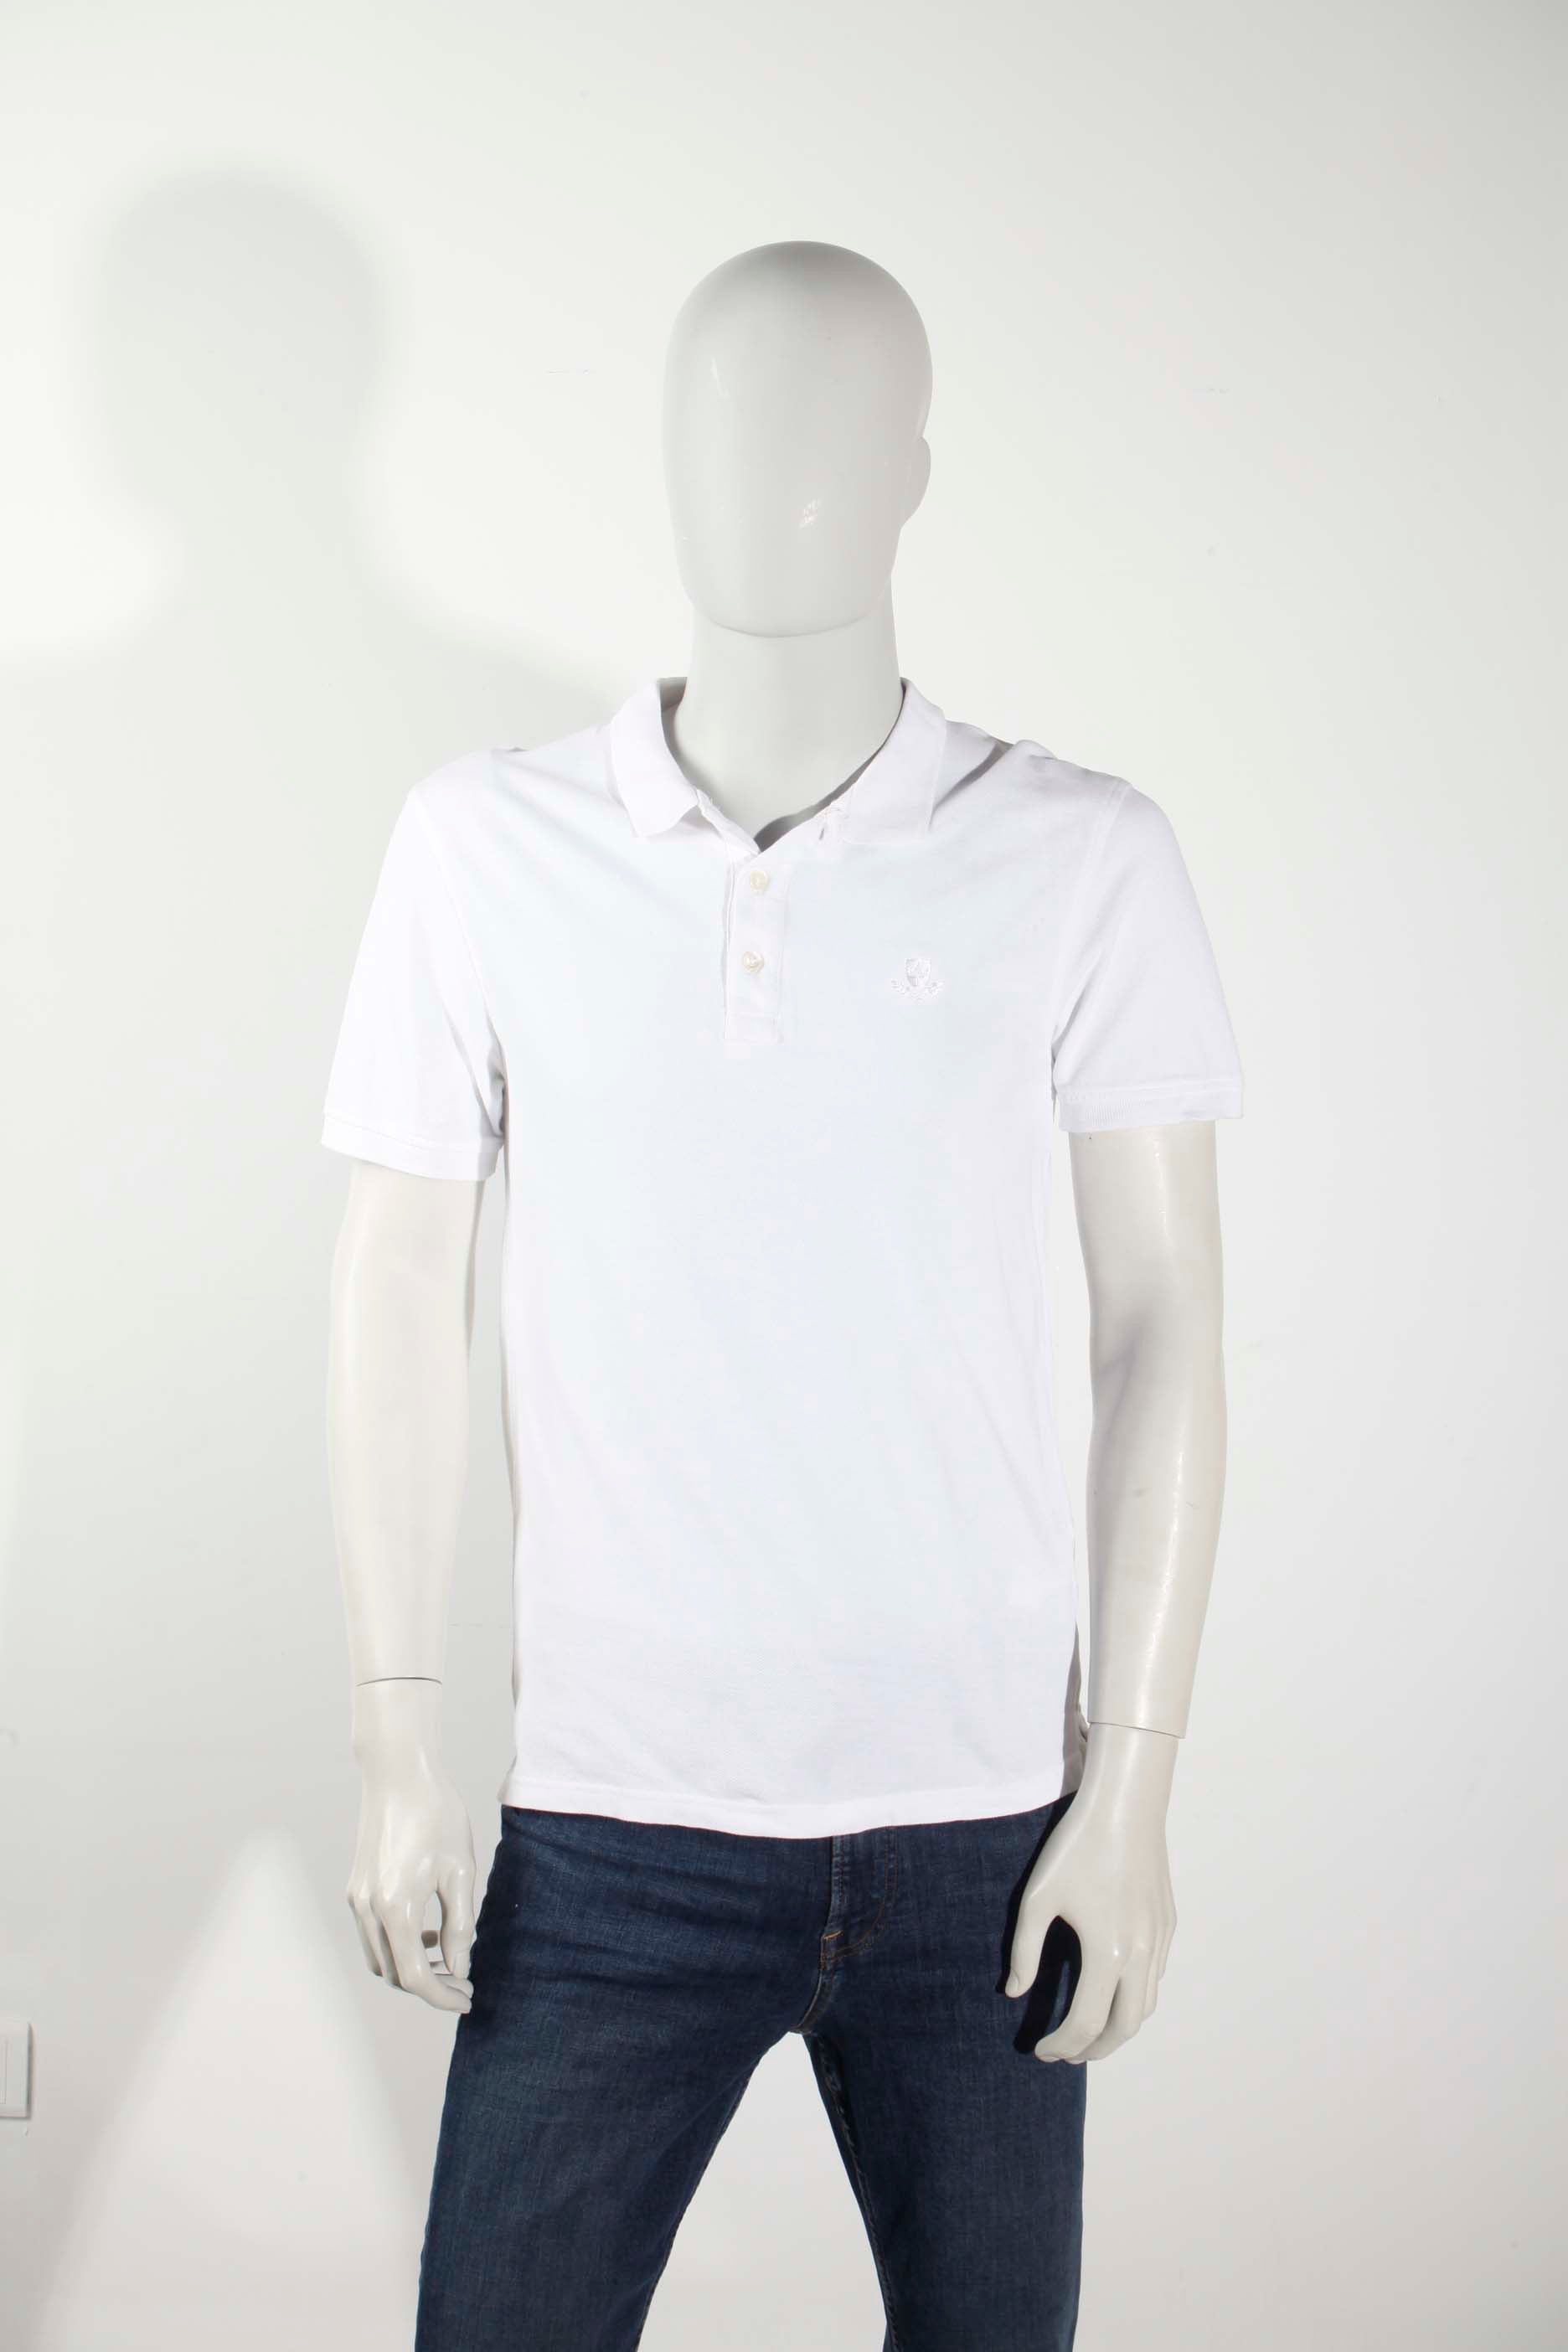 Mens White Polo Shirt (small)